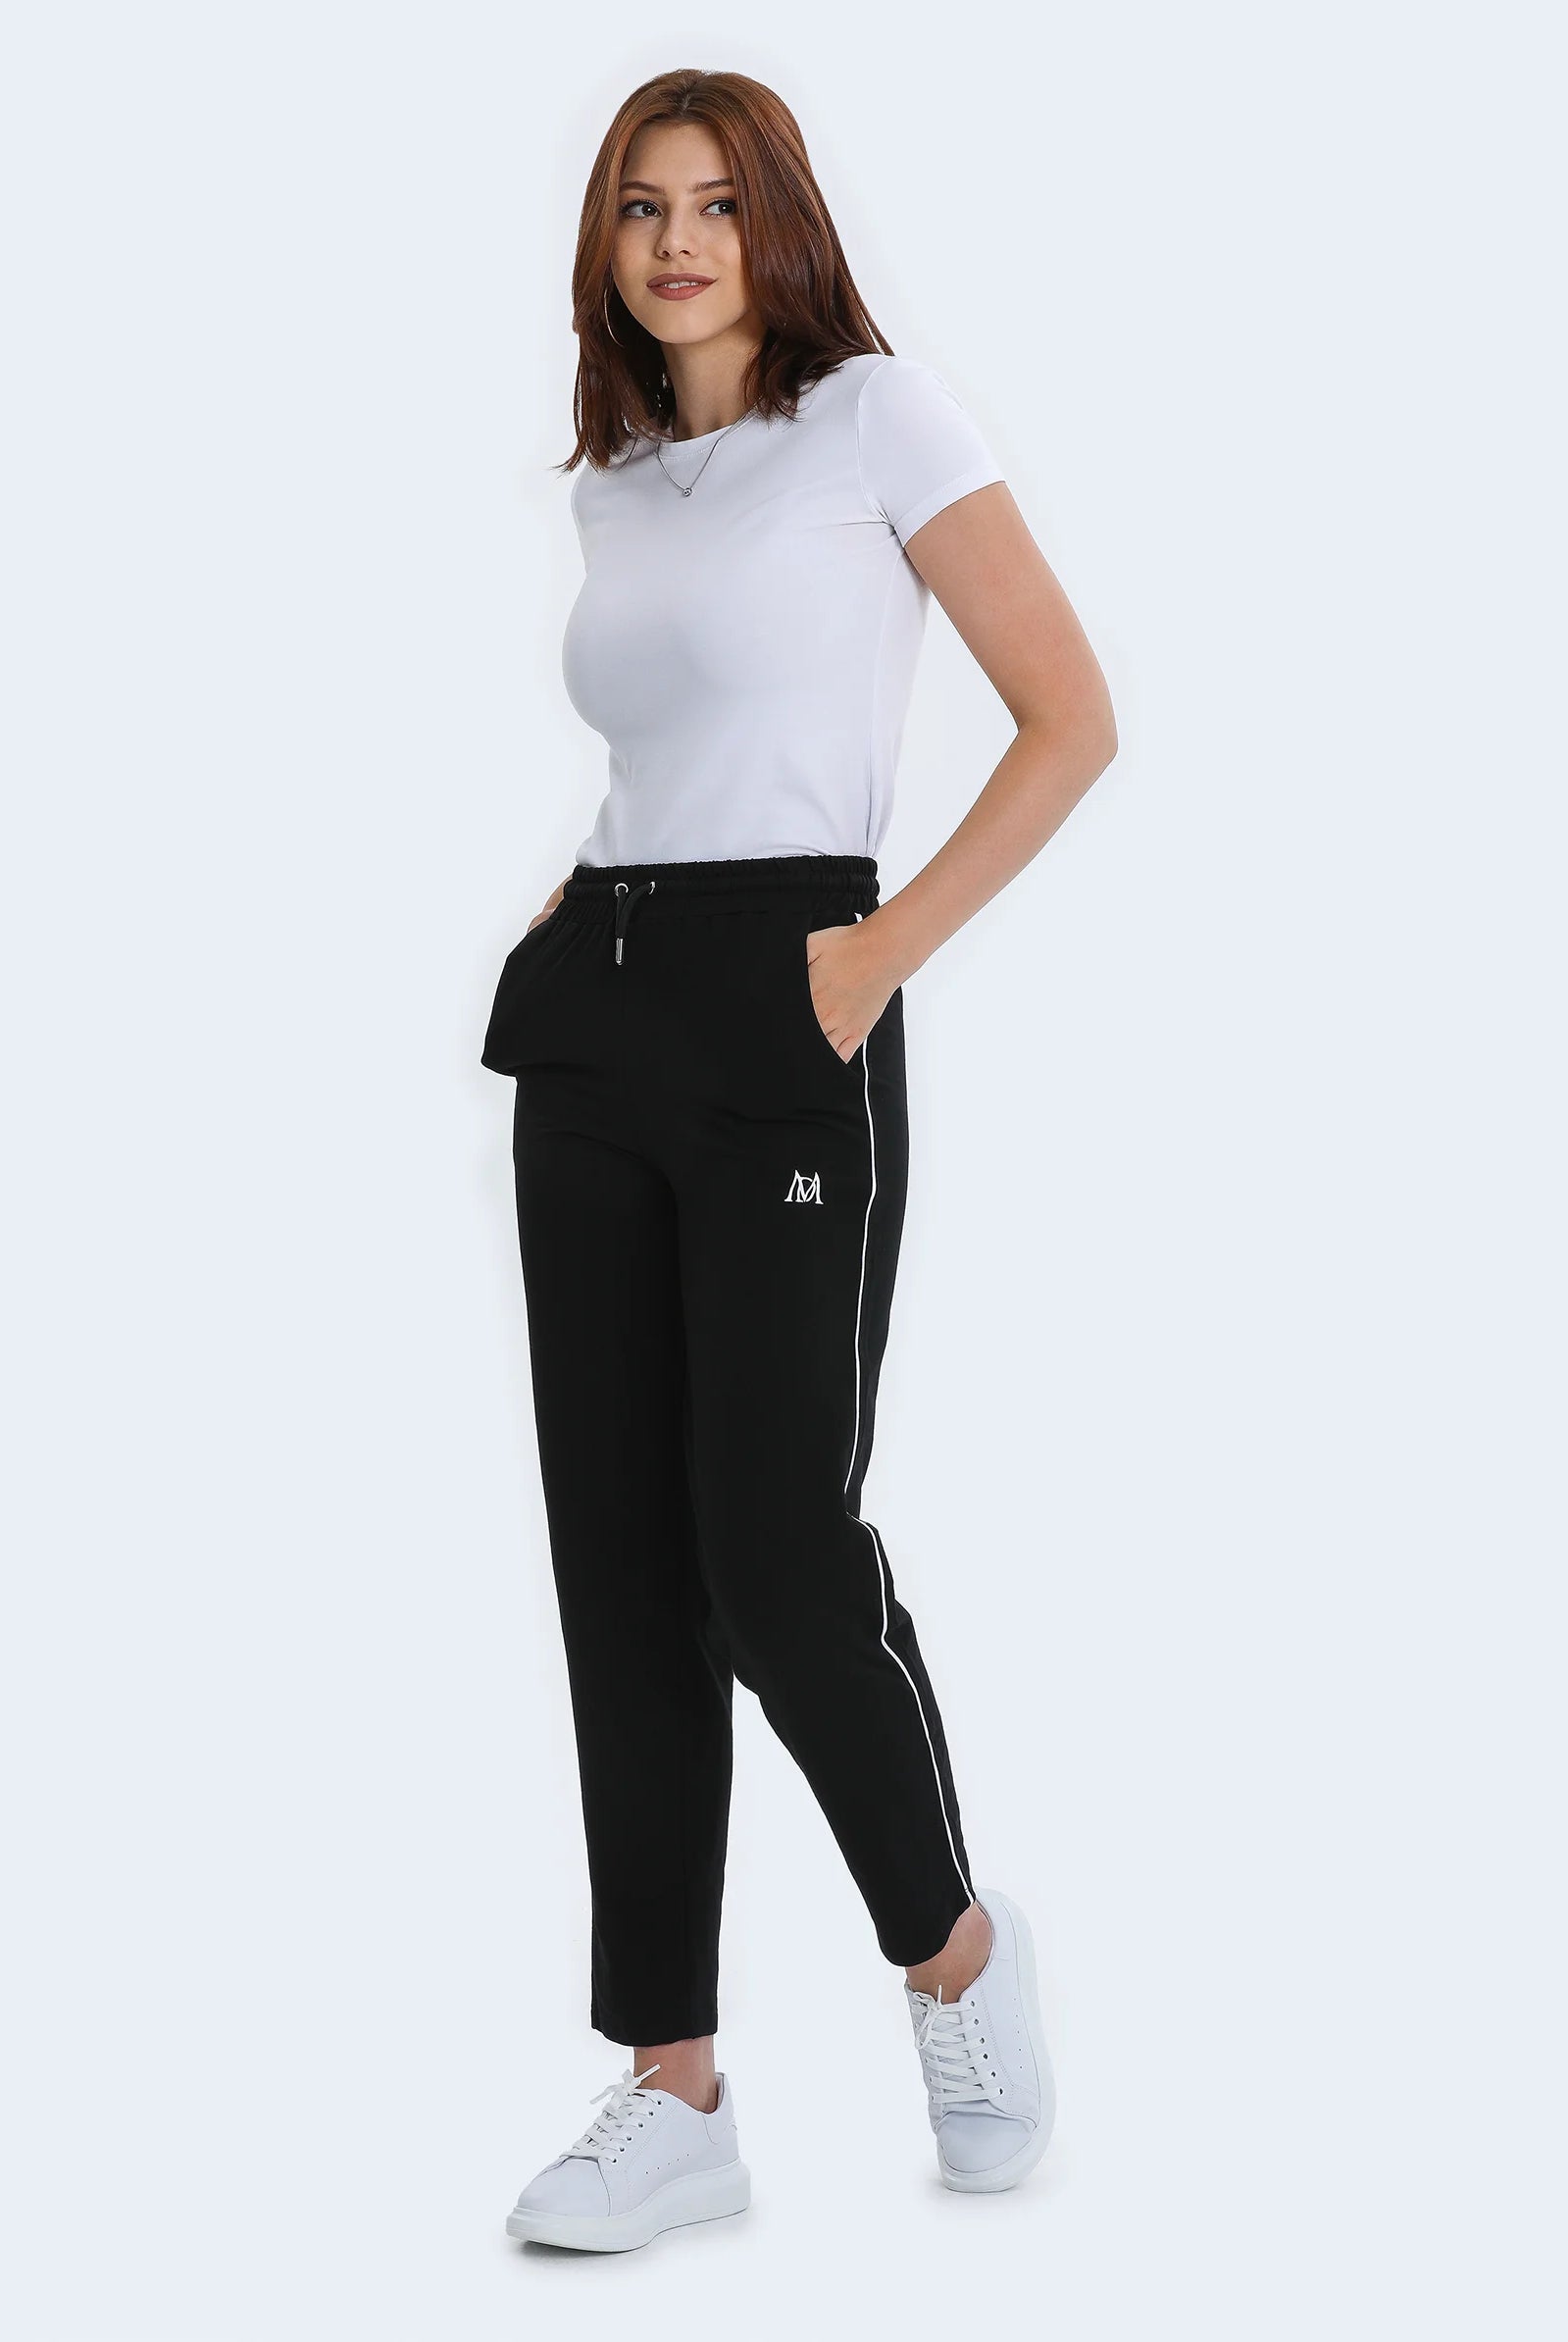 Buy Black Sweatpants Women UK, Women Sweatpants in Black – Modora UK